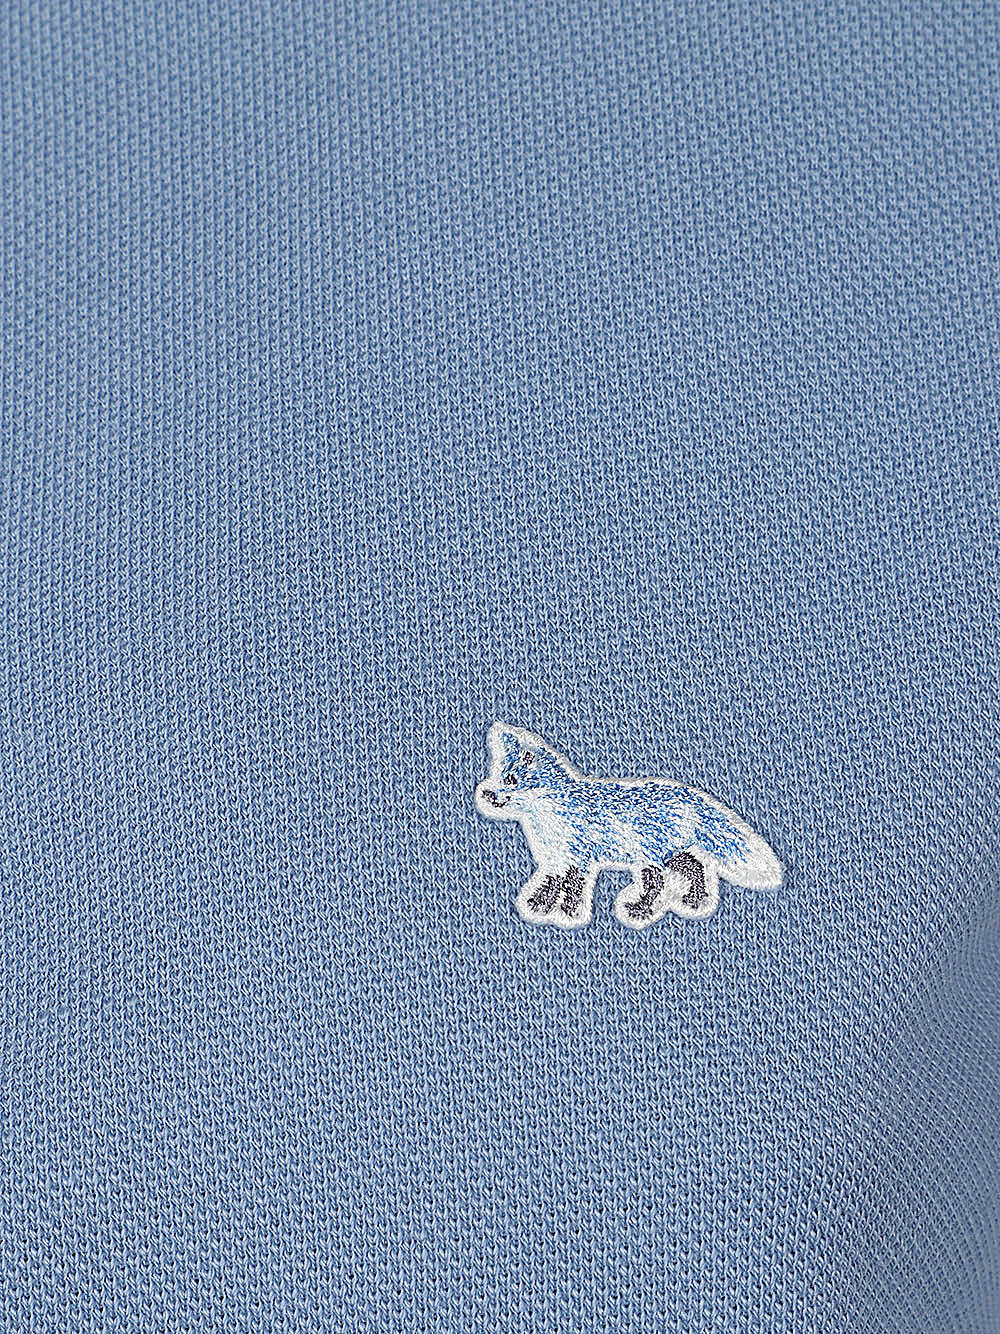 Maison Kitsune' T Shirts And Polos Clear Blue